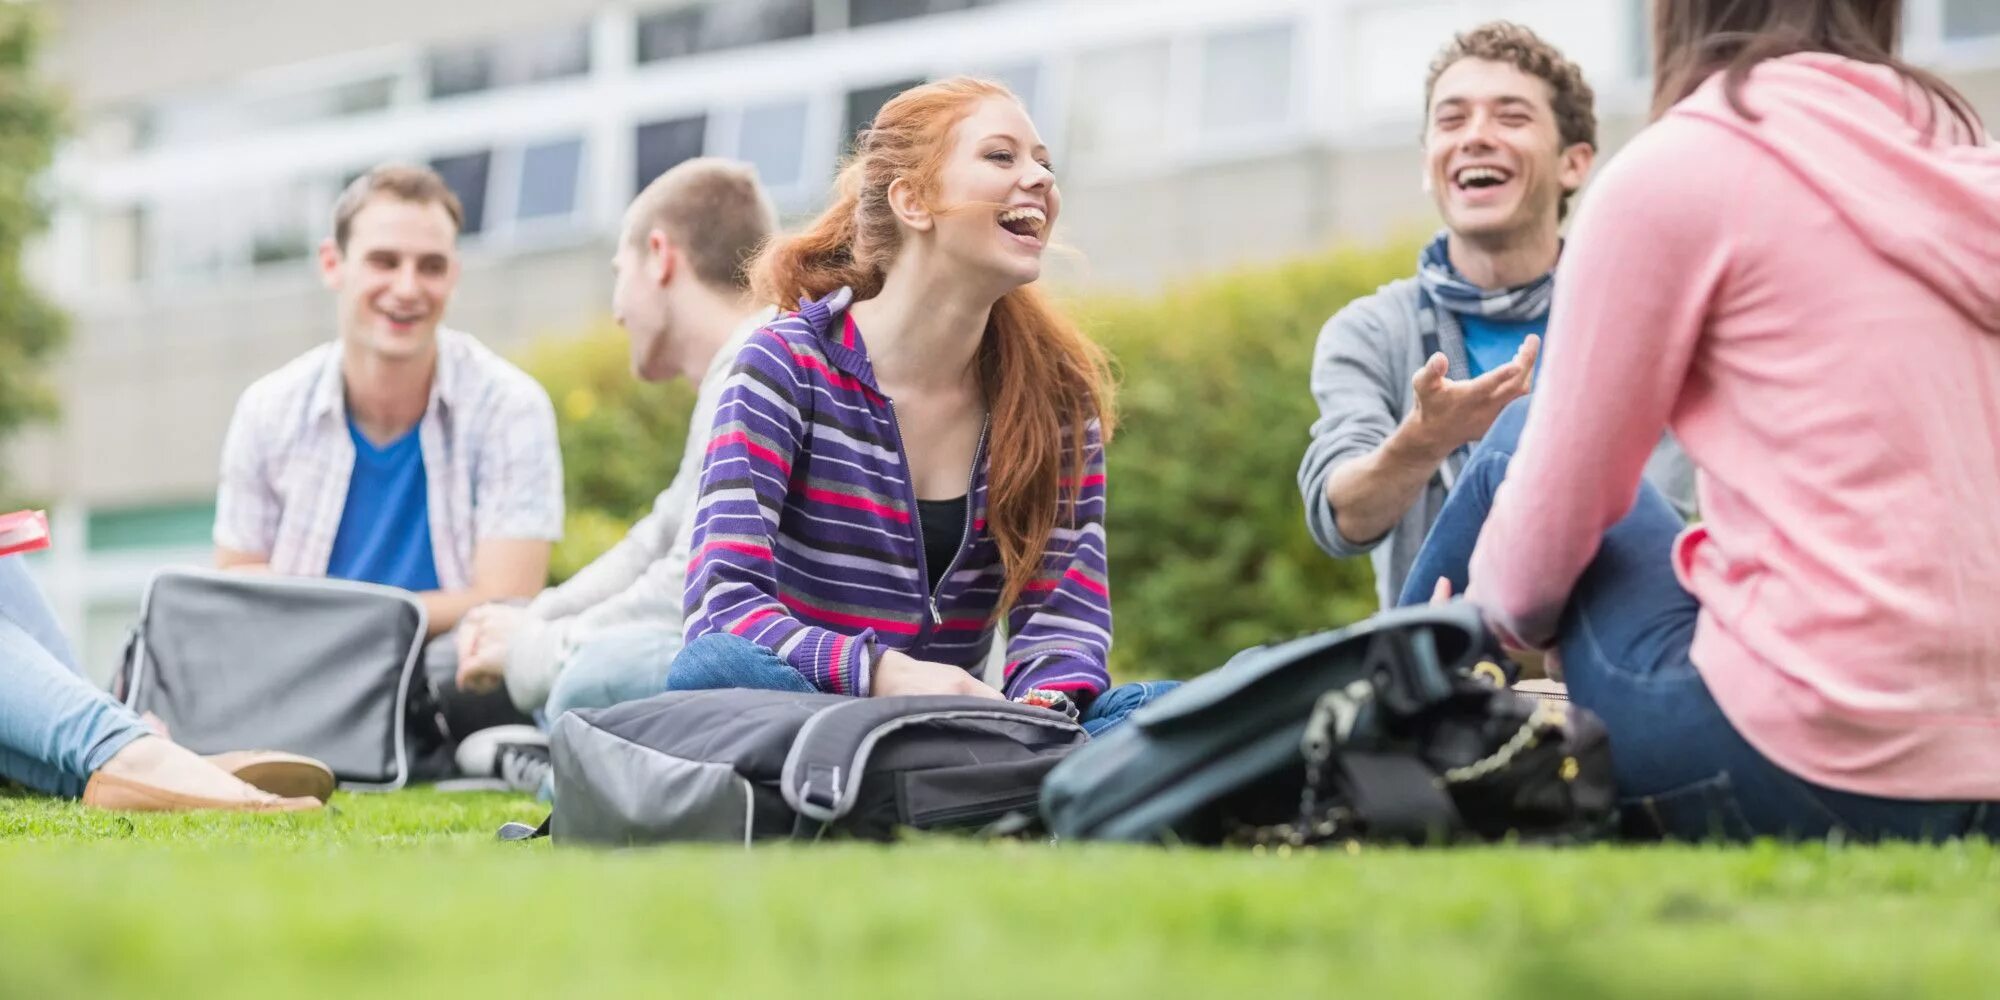 Student community. Студенты в парке. Студенты на траве. Фотосессия студентов. Студенты летом.